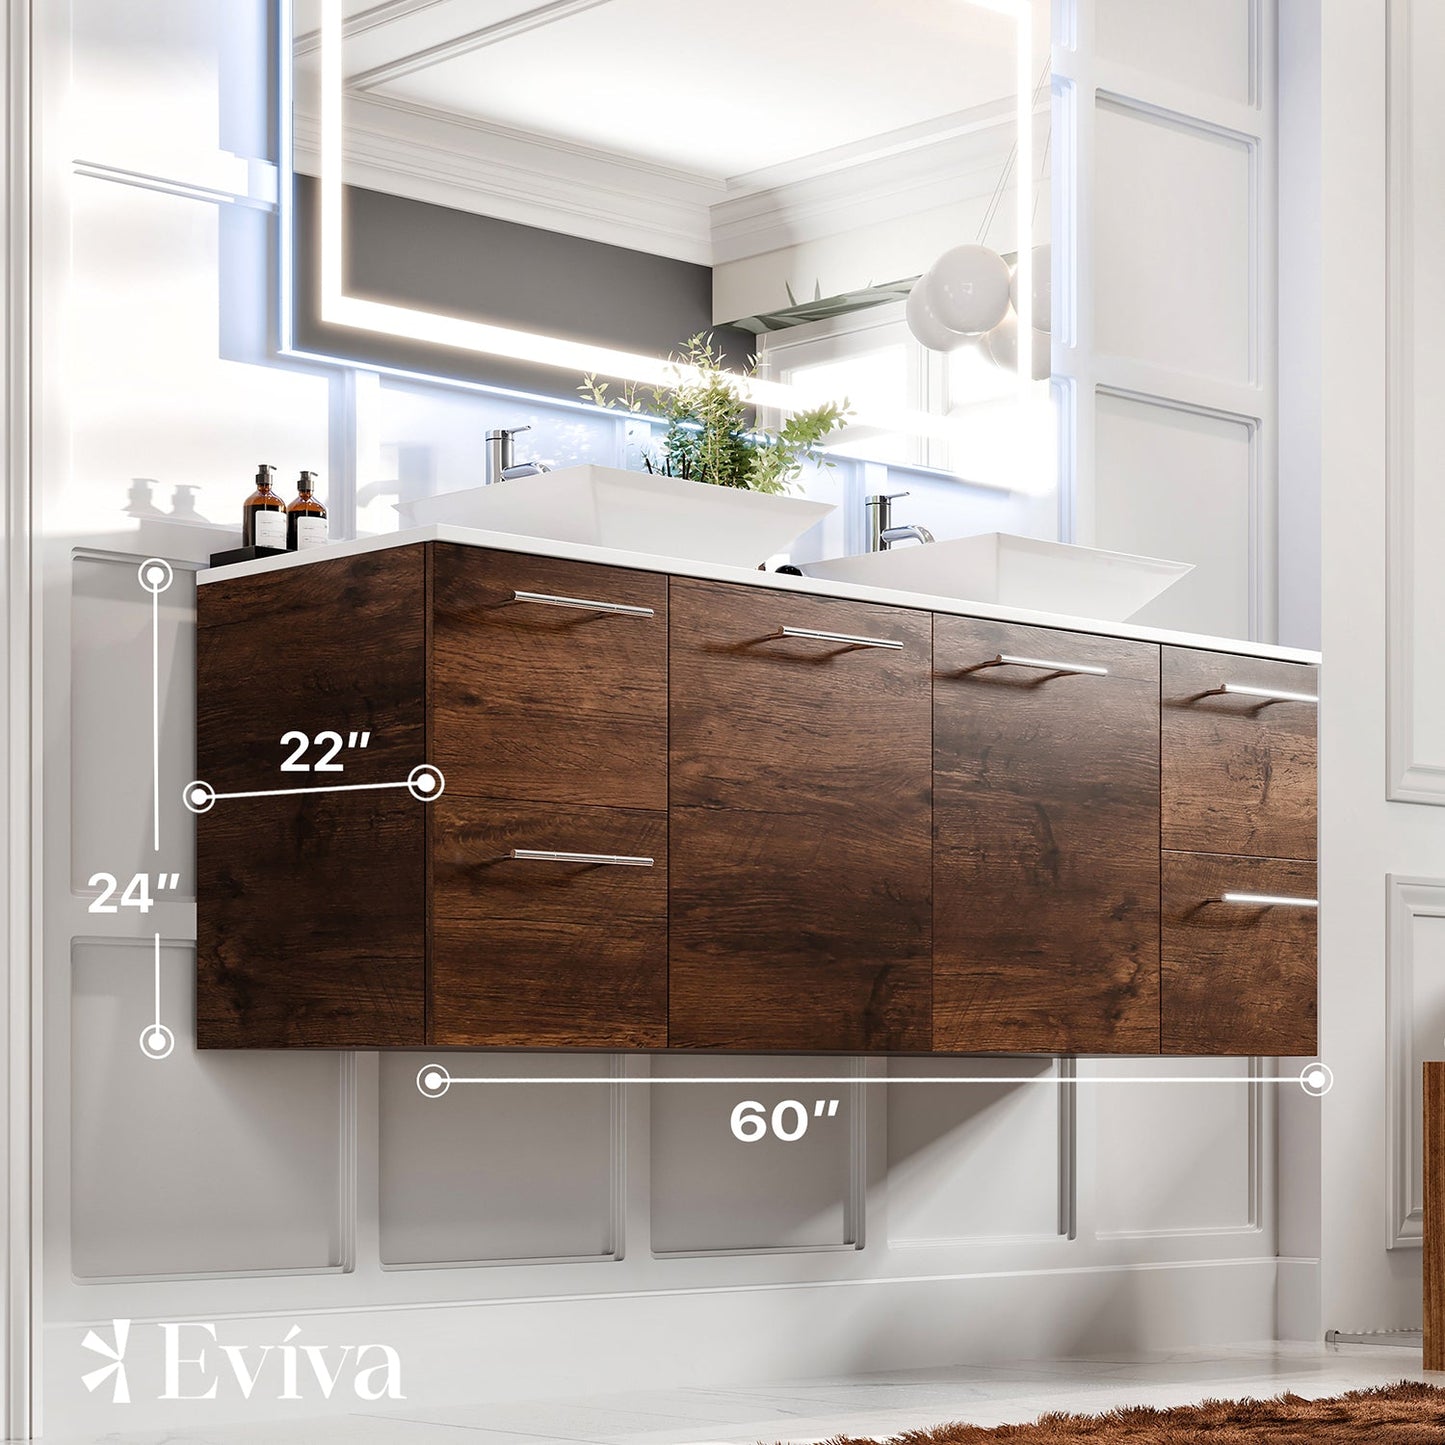 Eviva Luxurious 60 Inch Double Vessel Sink Vanity in Rosewood